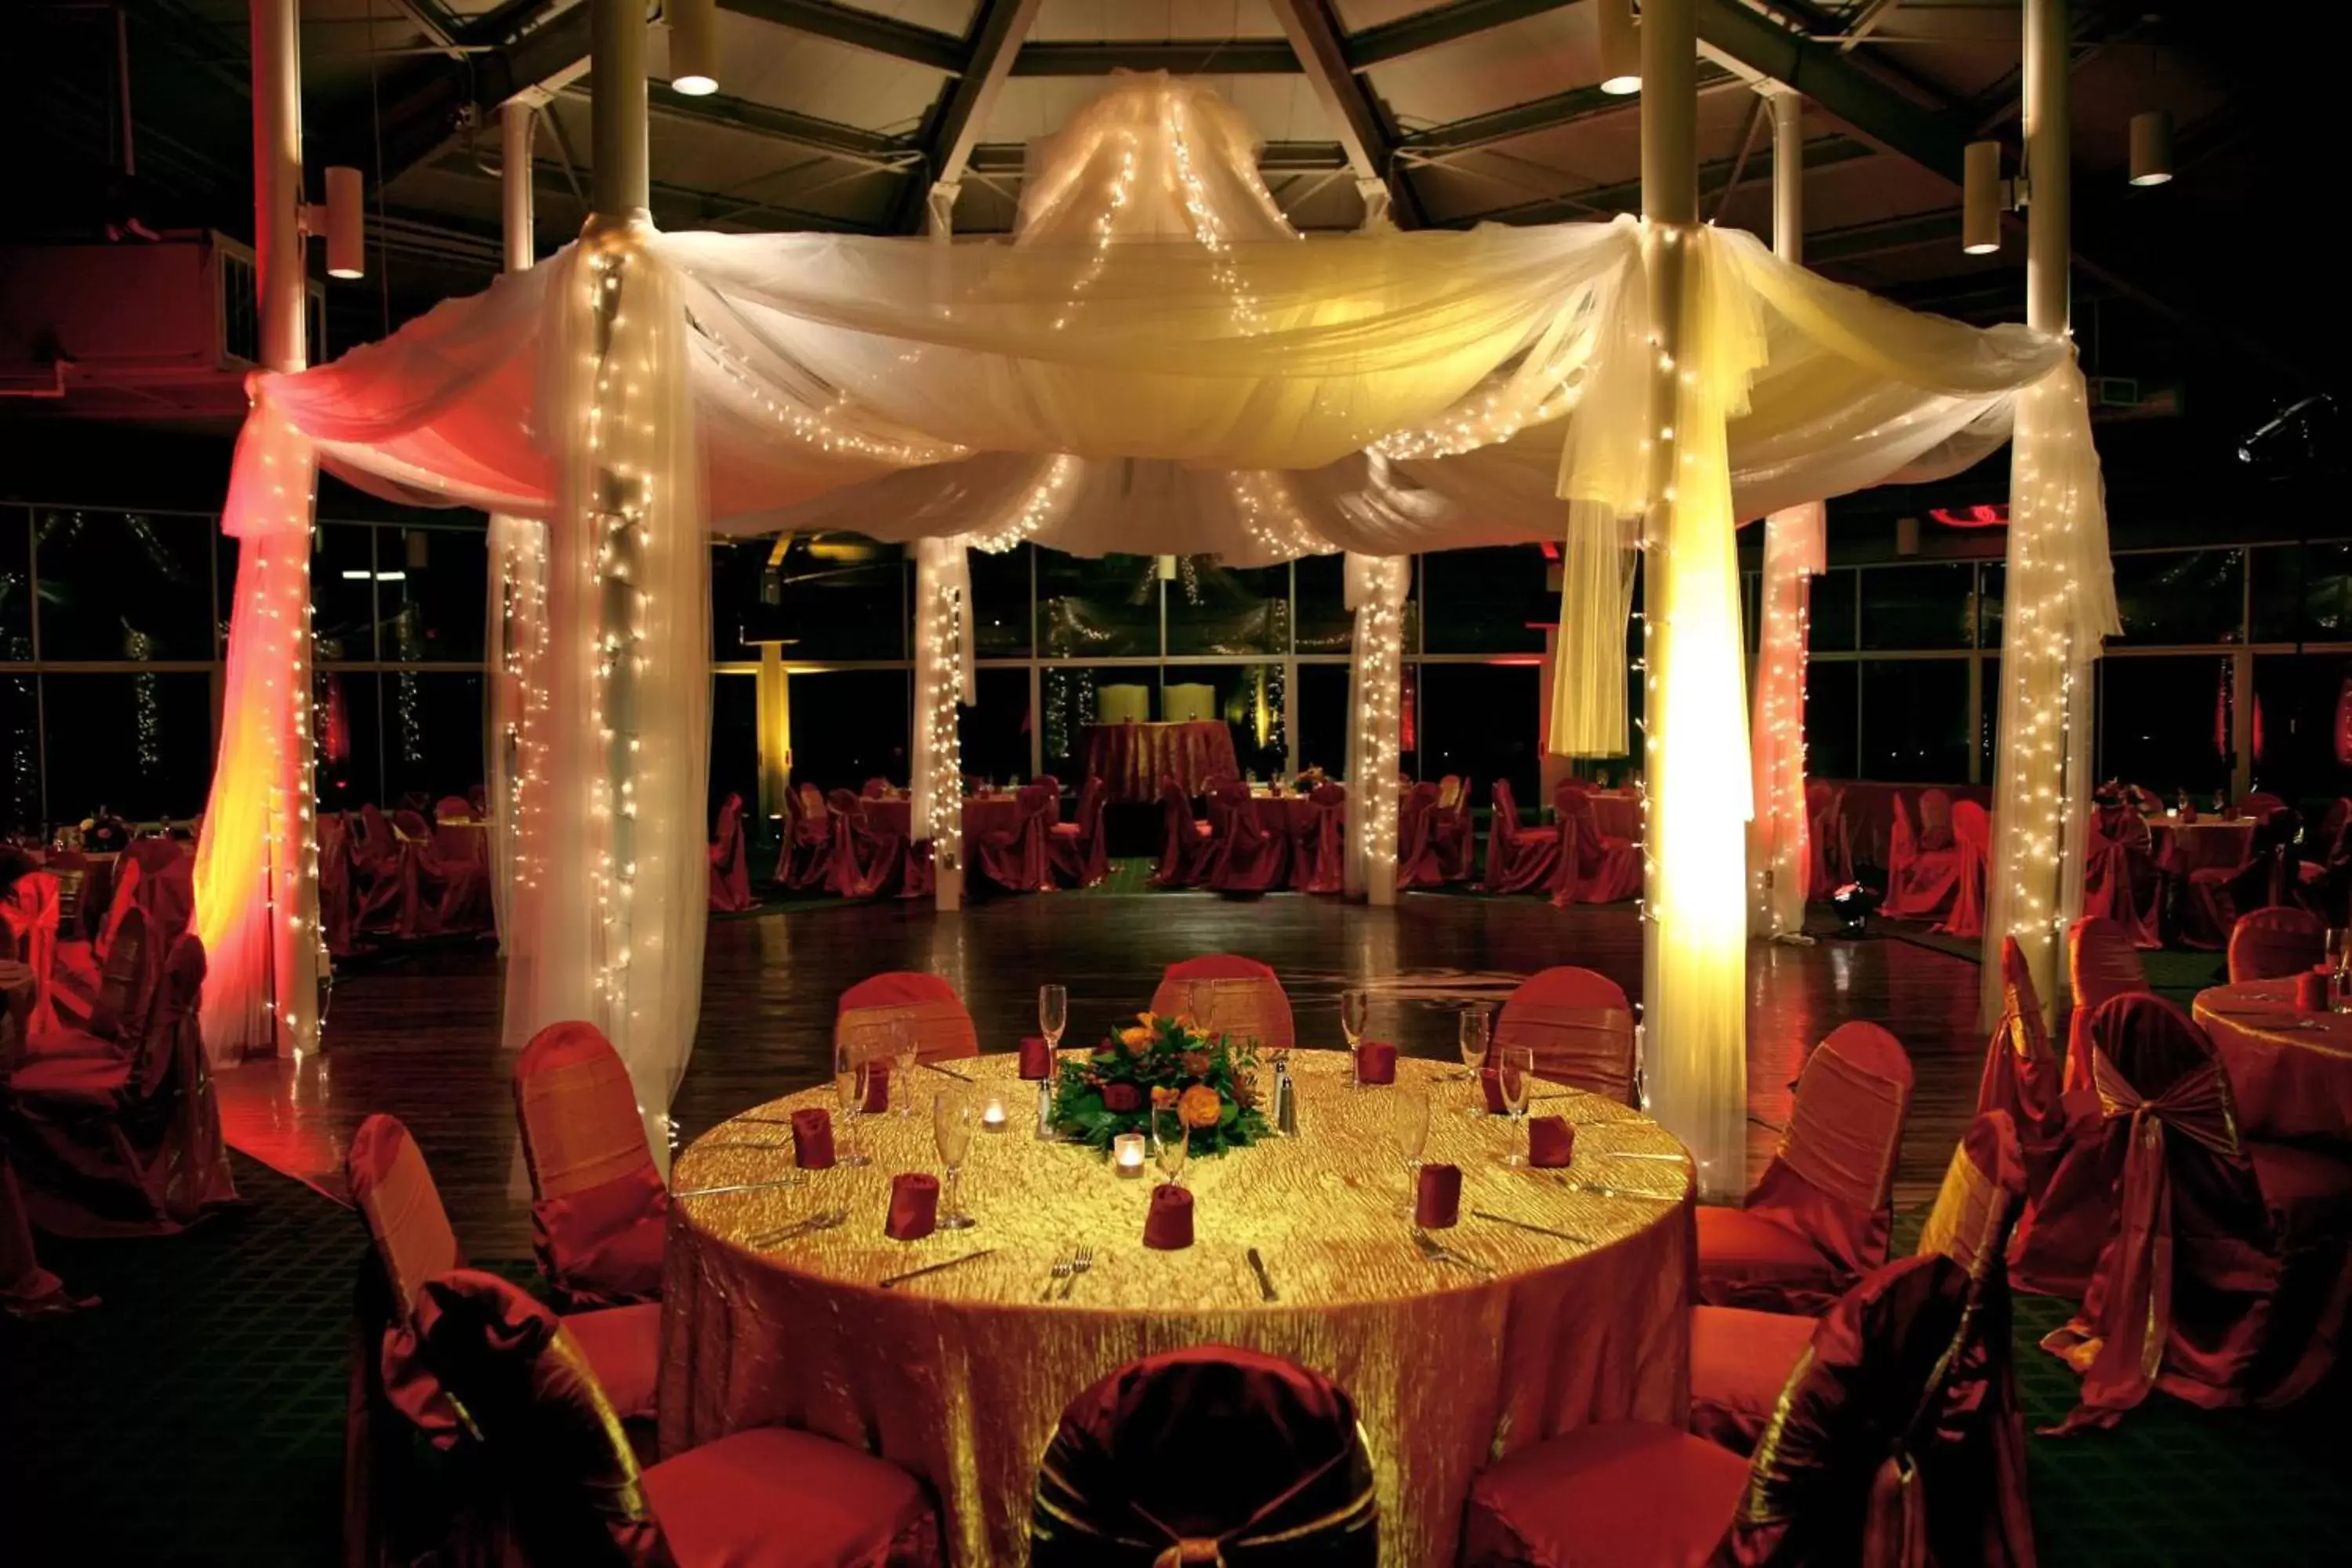 Banquet/Function facilities, Banquet Facilities in Sheraton Arlington Hotel